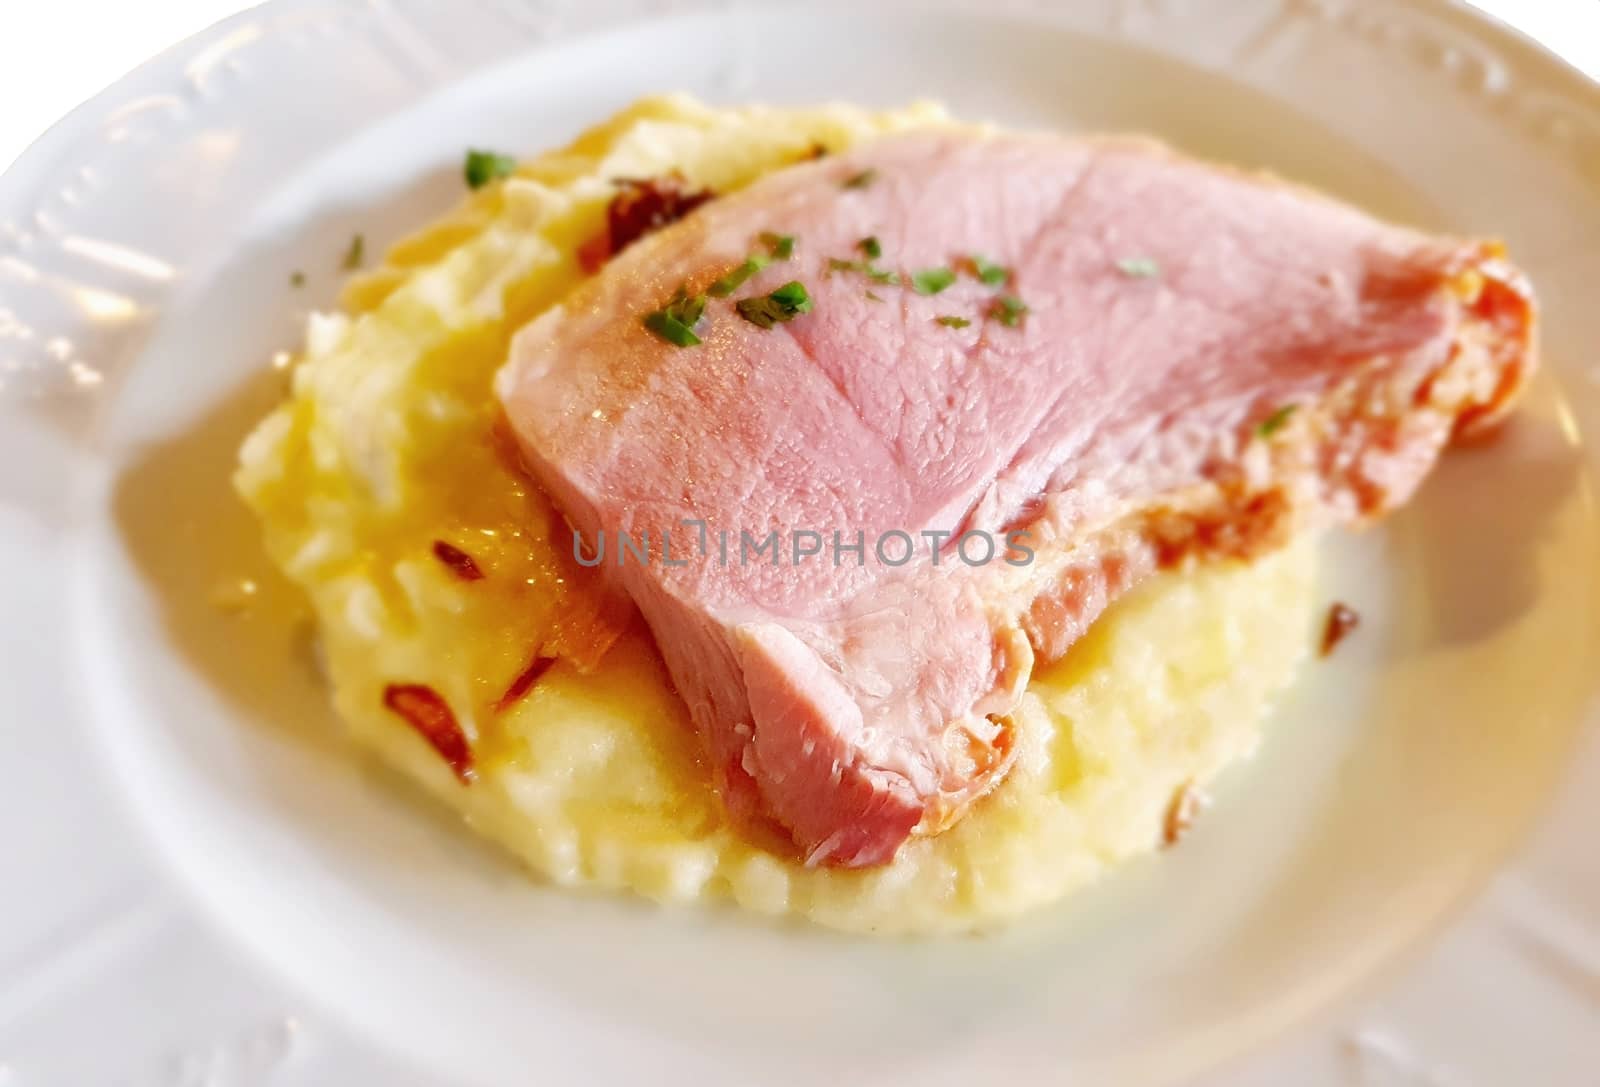 Roast ham slice with mashed potatoes on white plate.